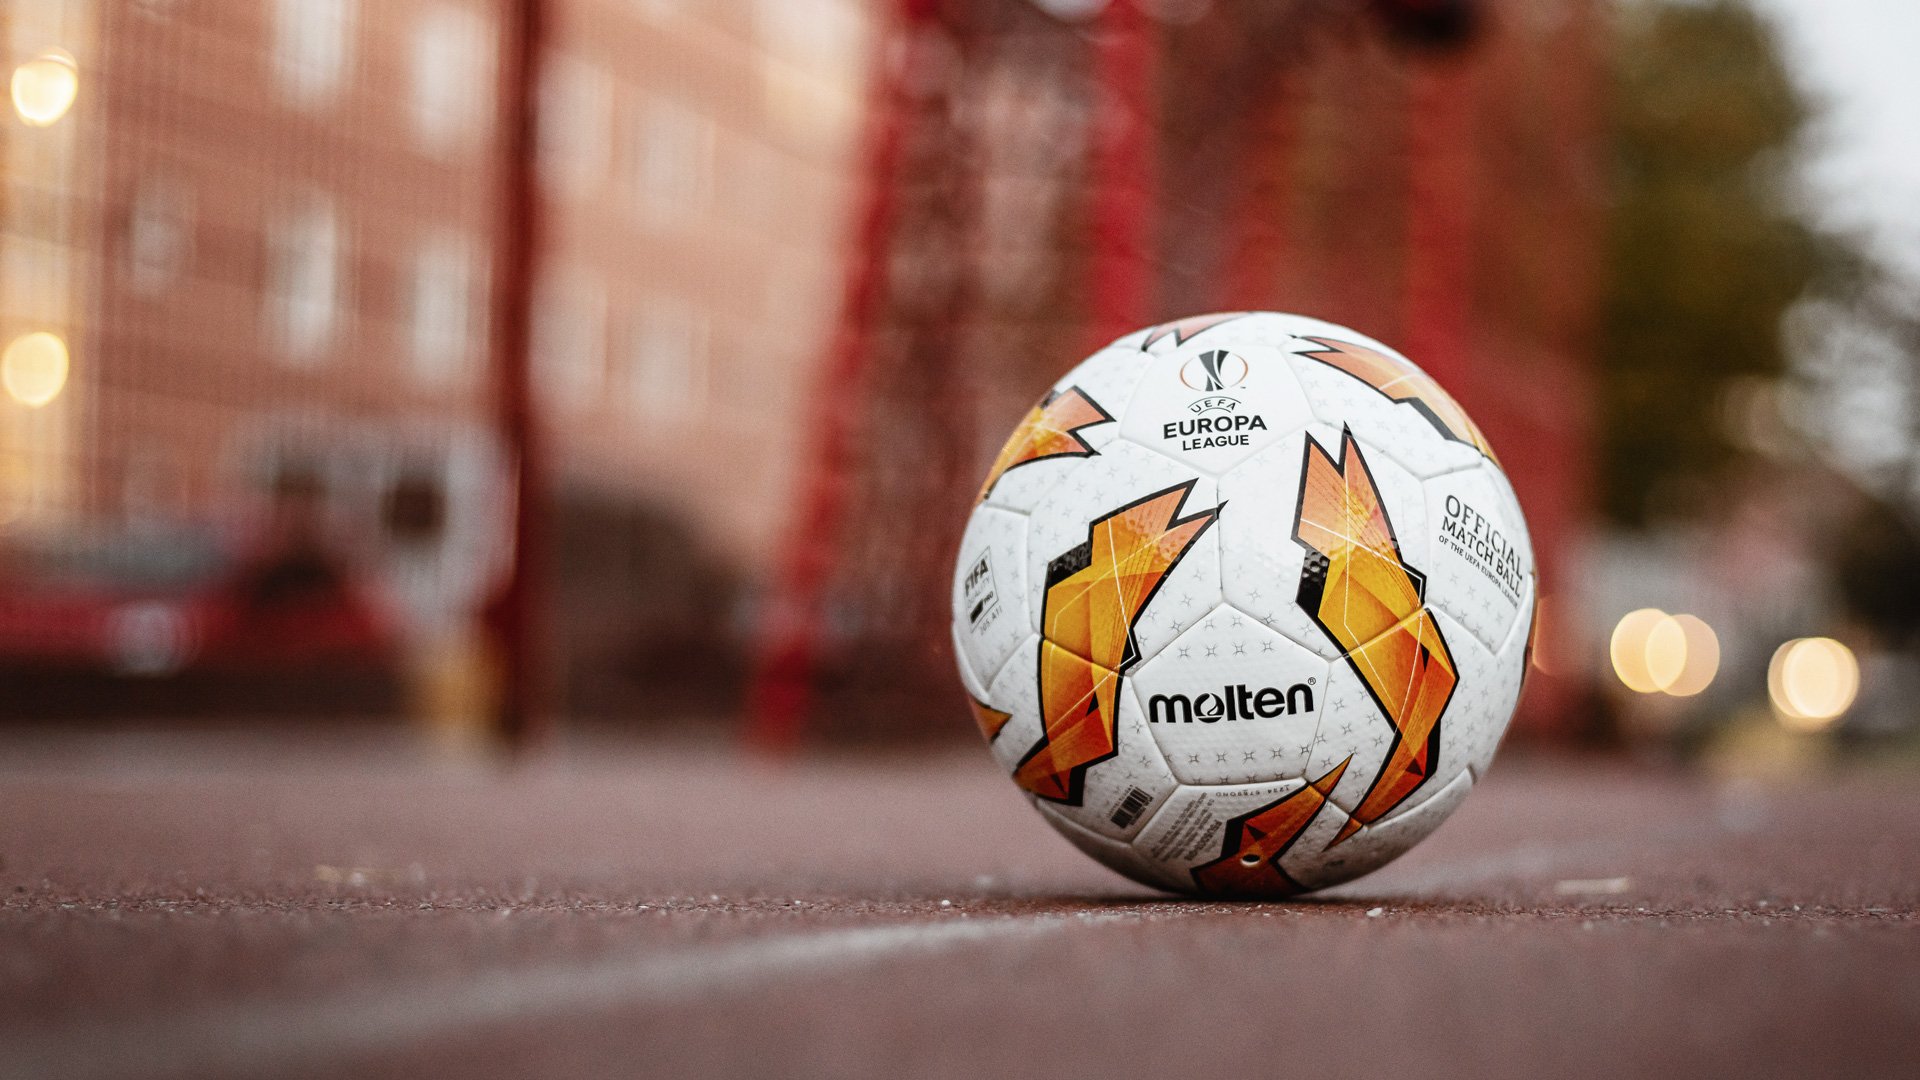 Molten Official Match Ball of the UEFA Europa League 2018/19 